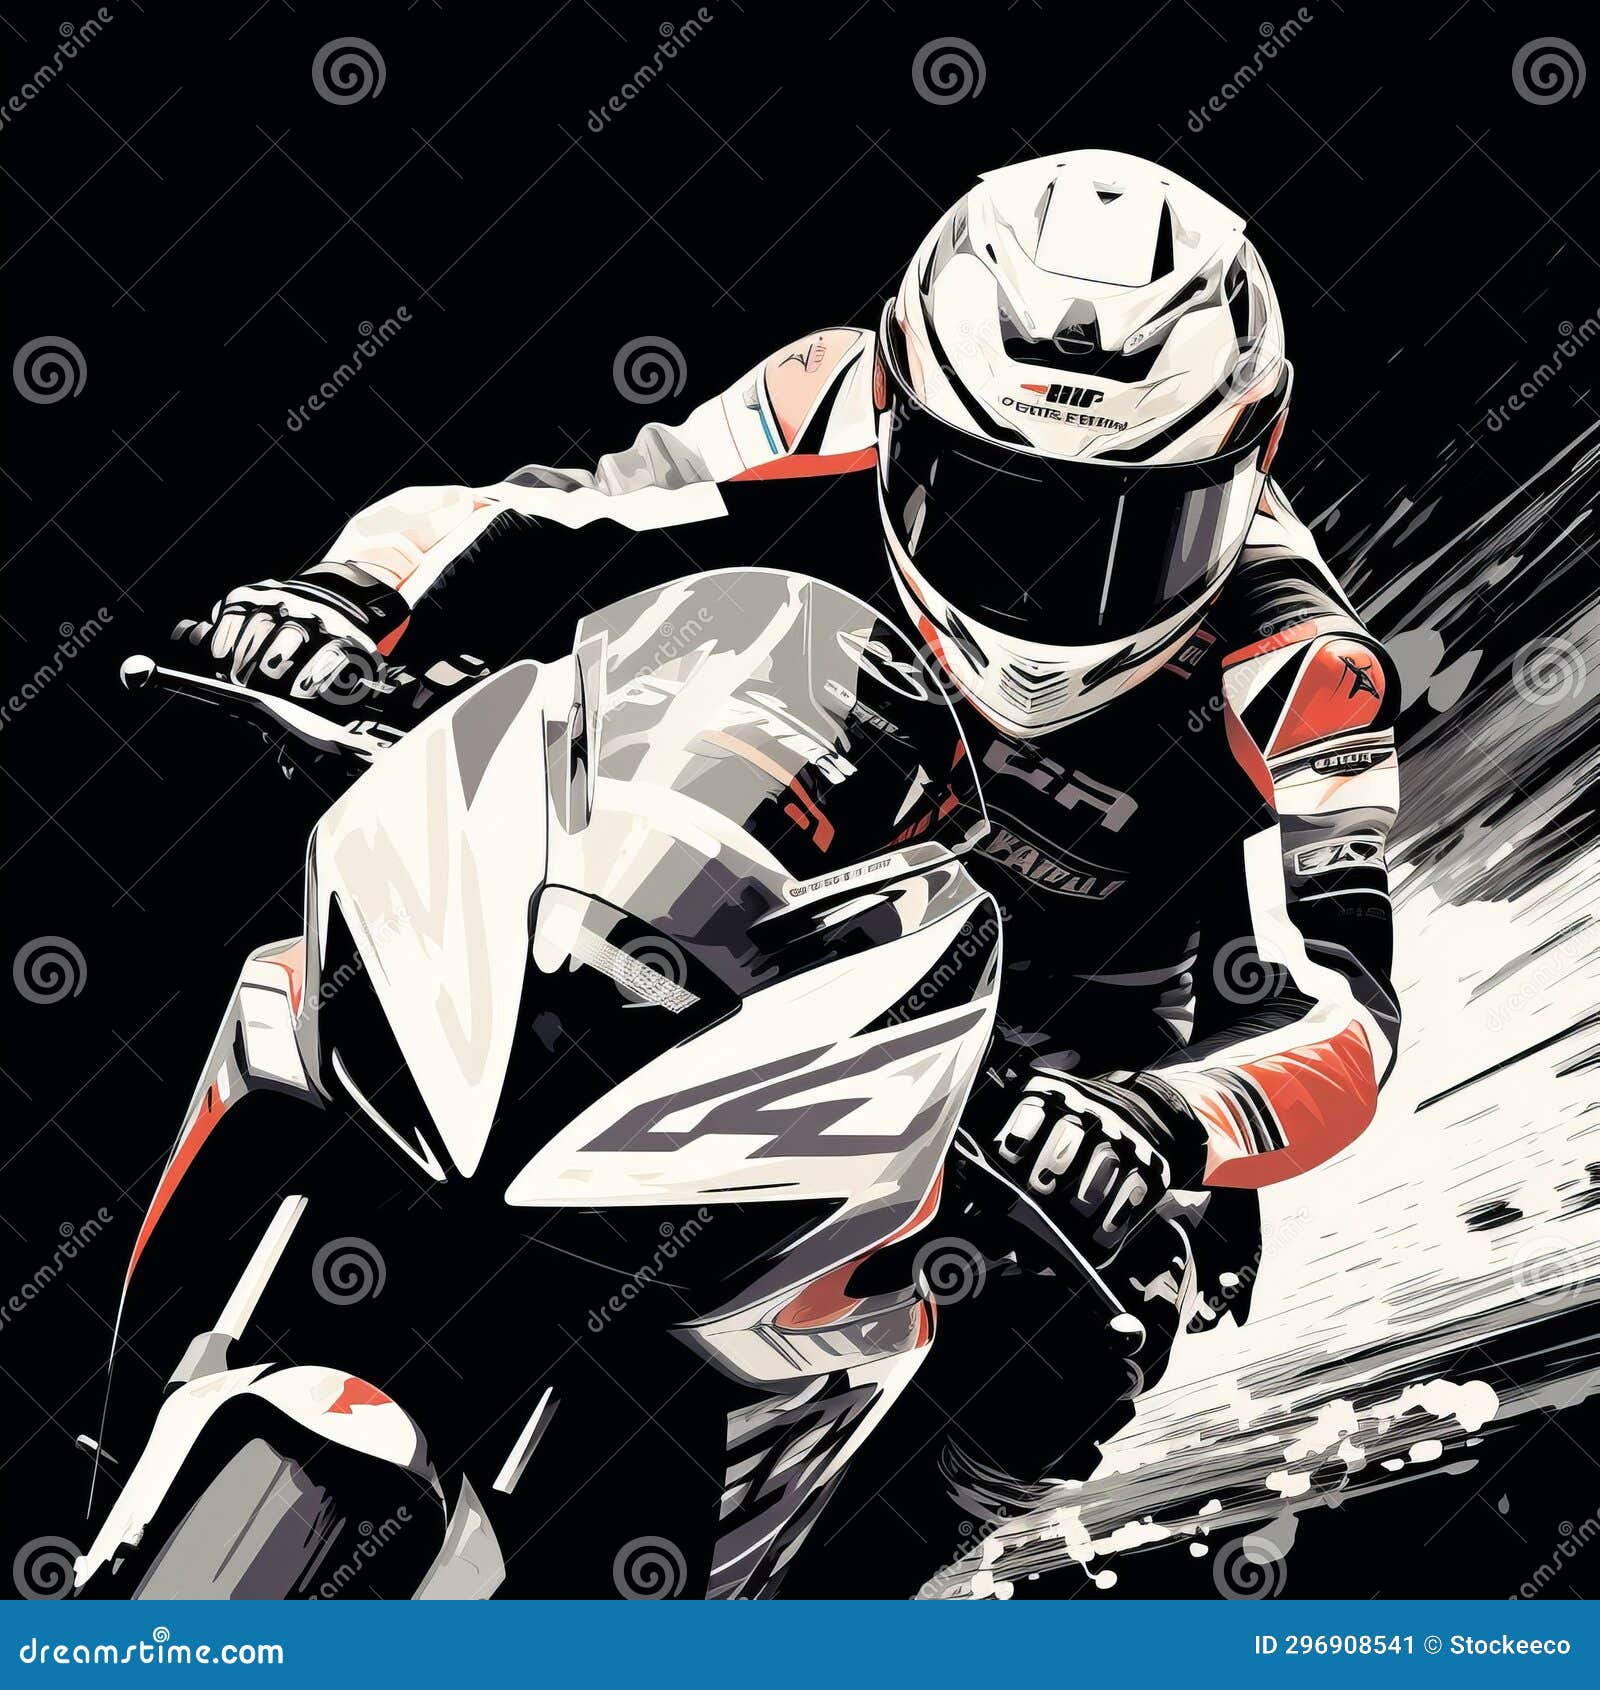 Dynamic Black and White Motorcycle Rider Artwork Stock Illustration ...